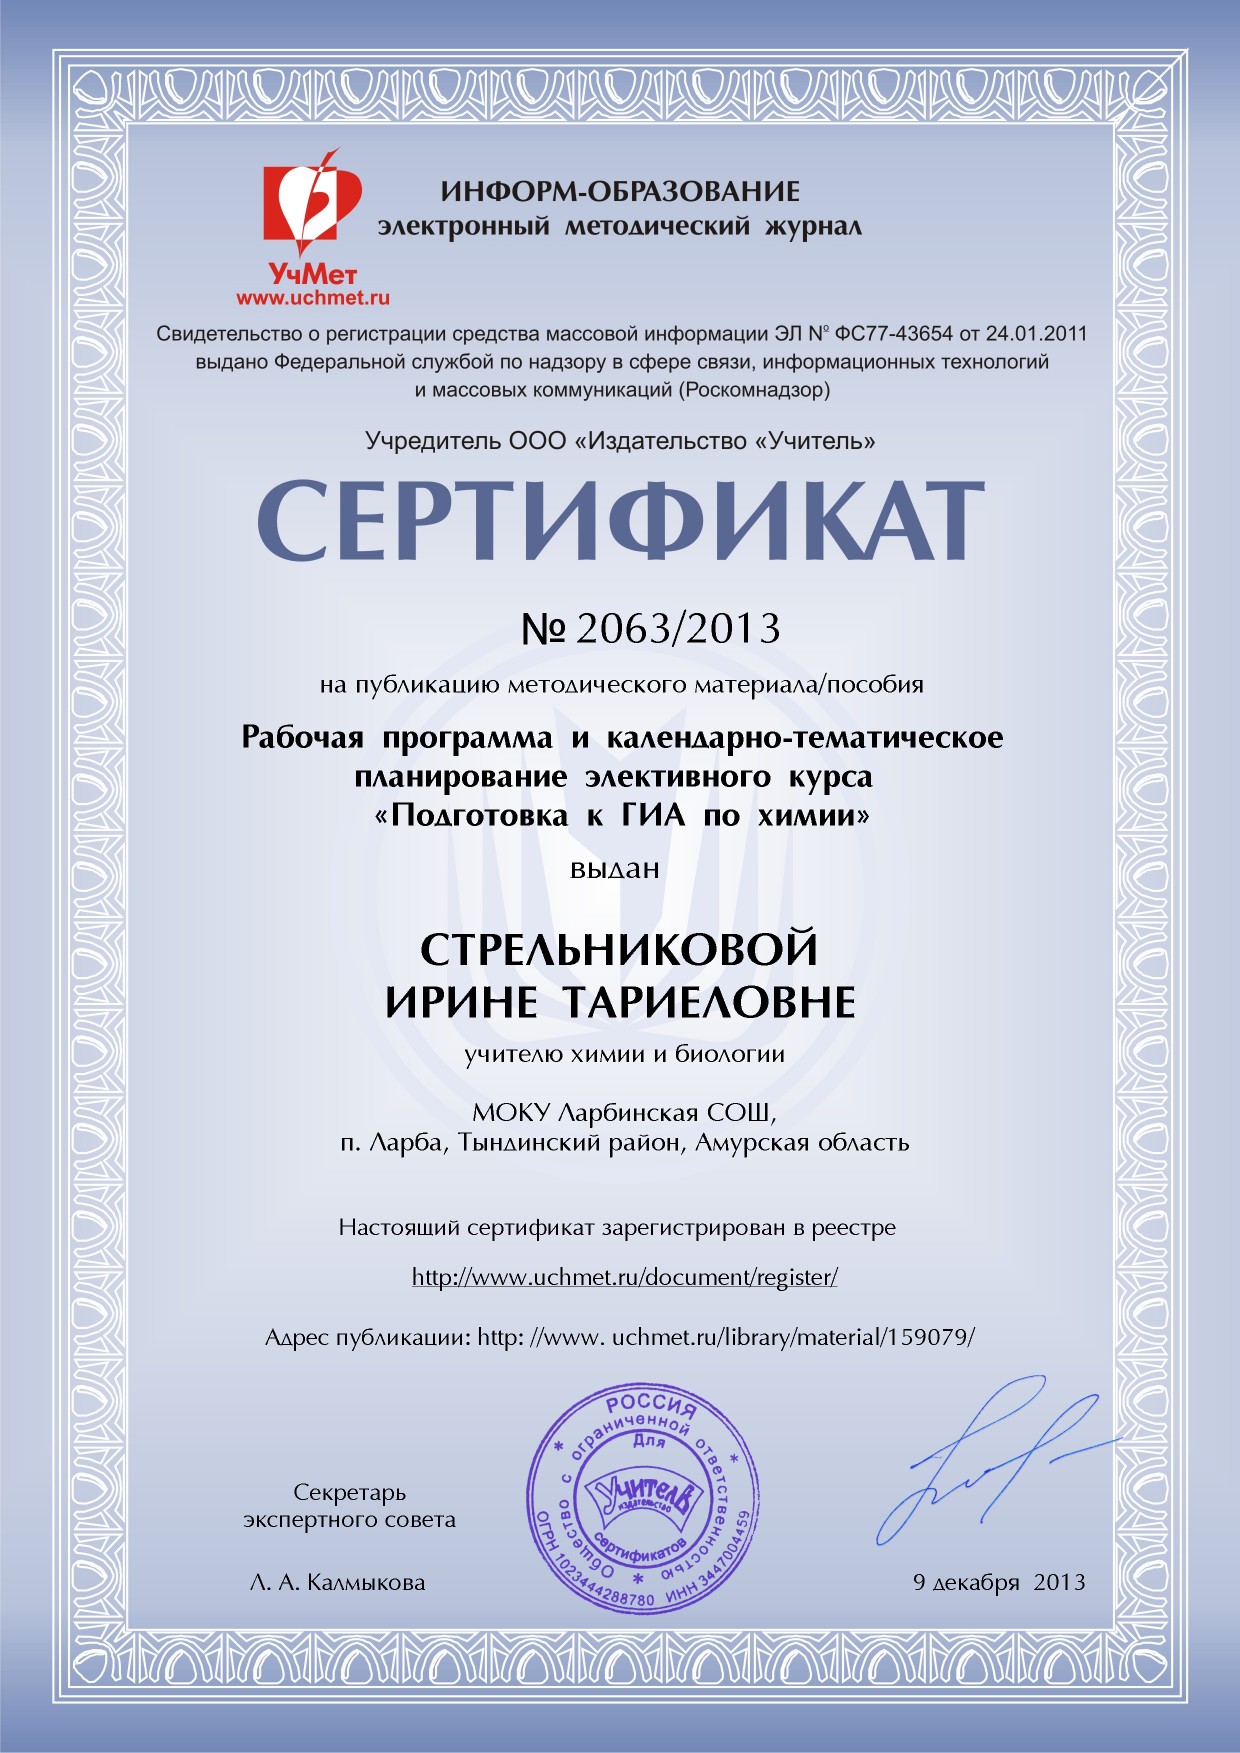 http://biohimistri.ucoz.net/images/podgotovka_k_gia_sertifikat.jpg